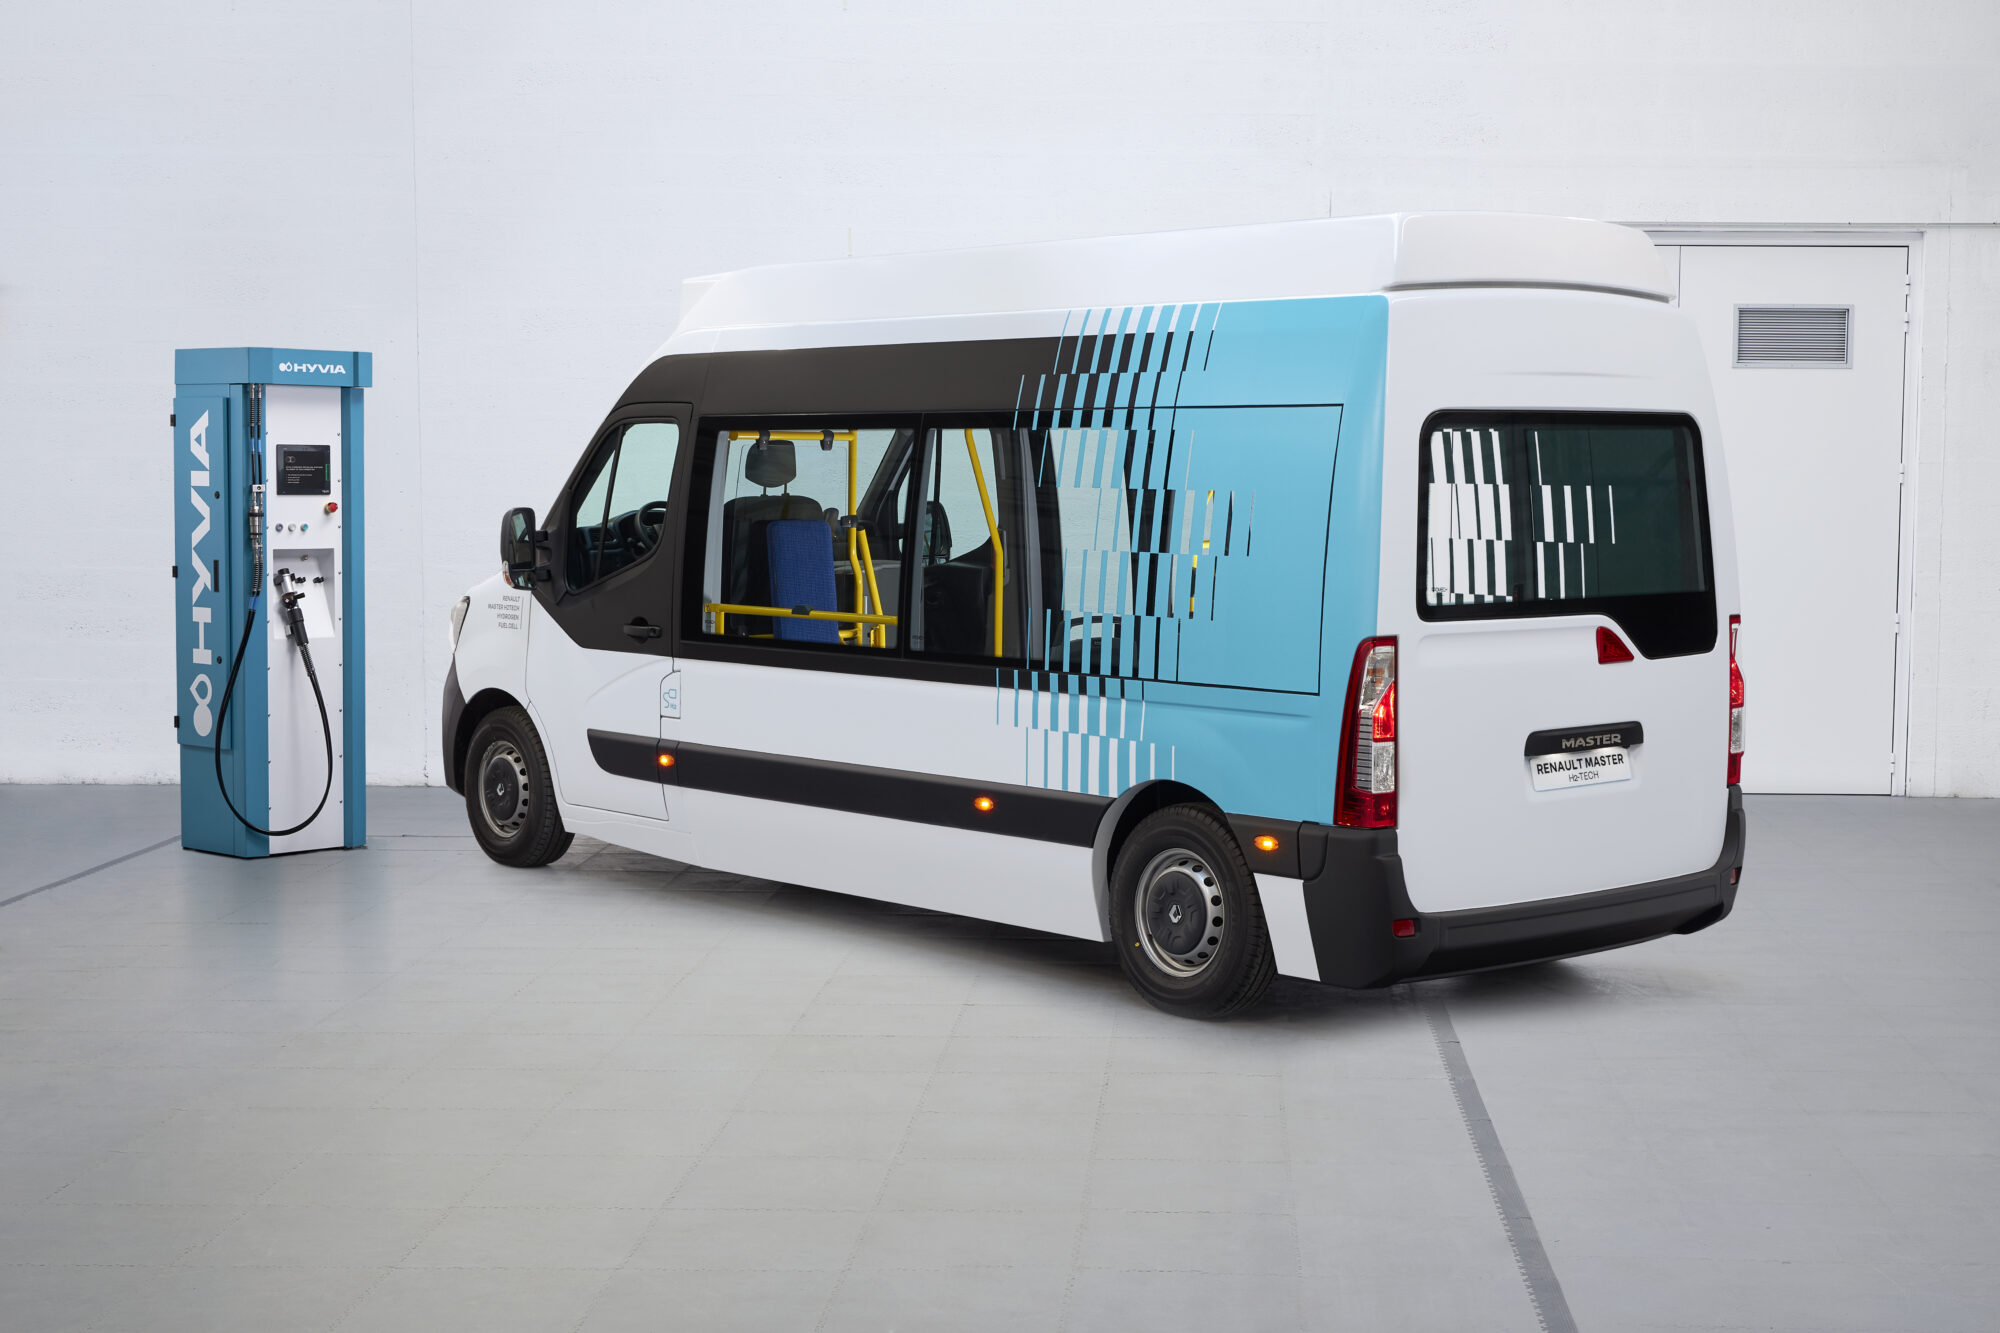 2021 - HYVIA - Renault Master City Bus H2-TECH.jpeg